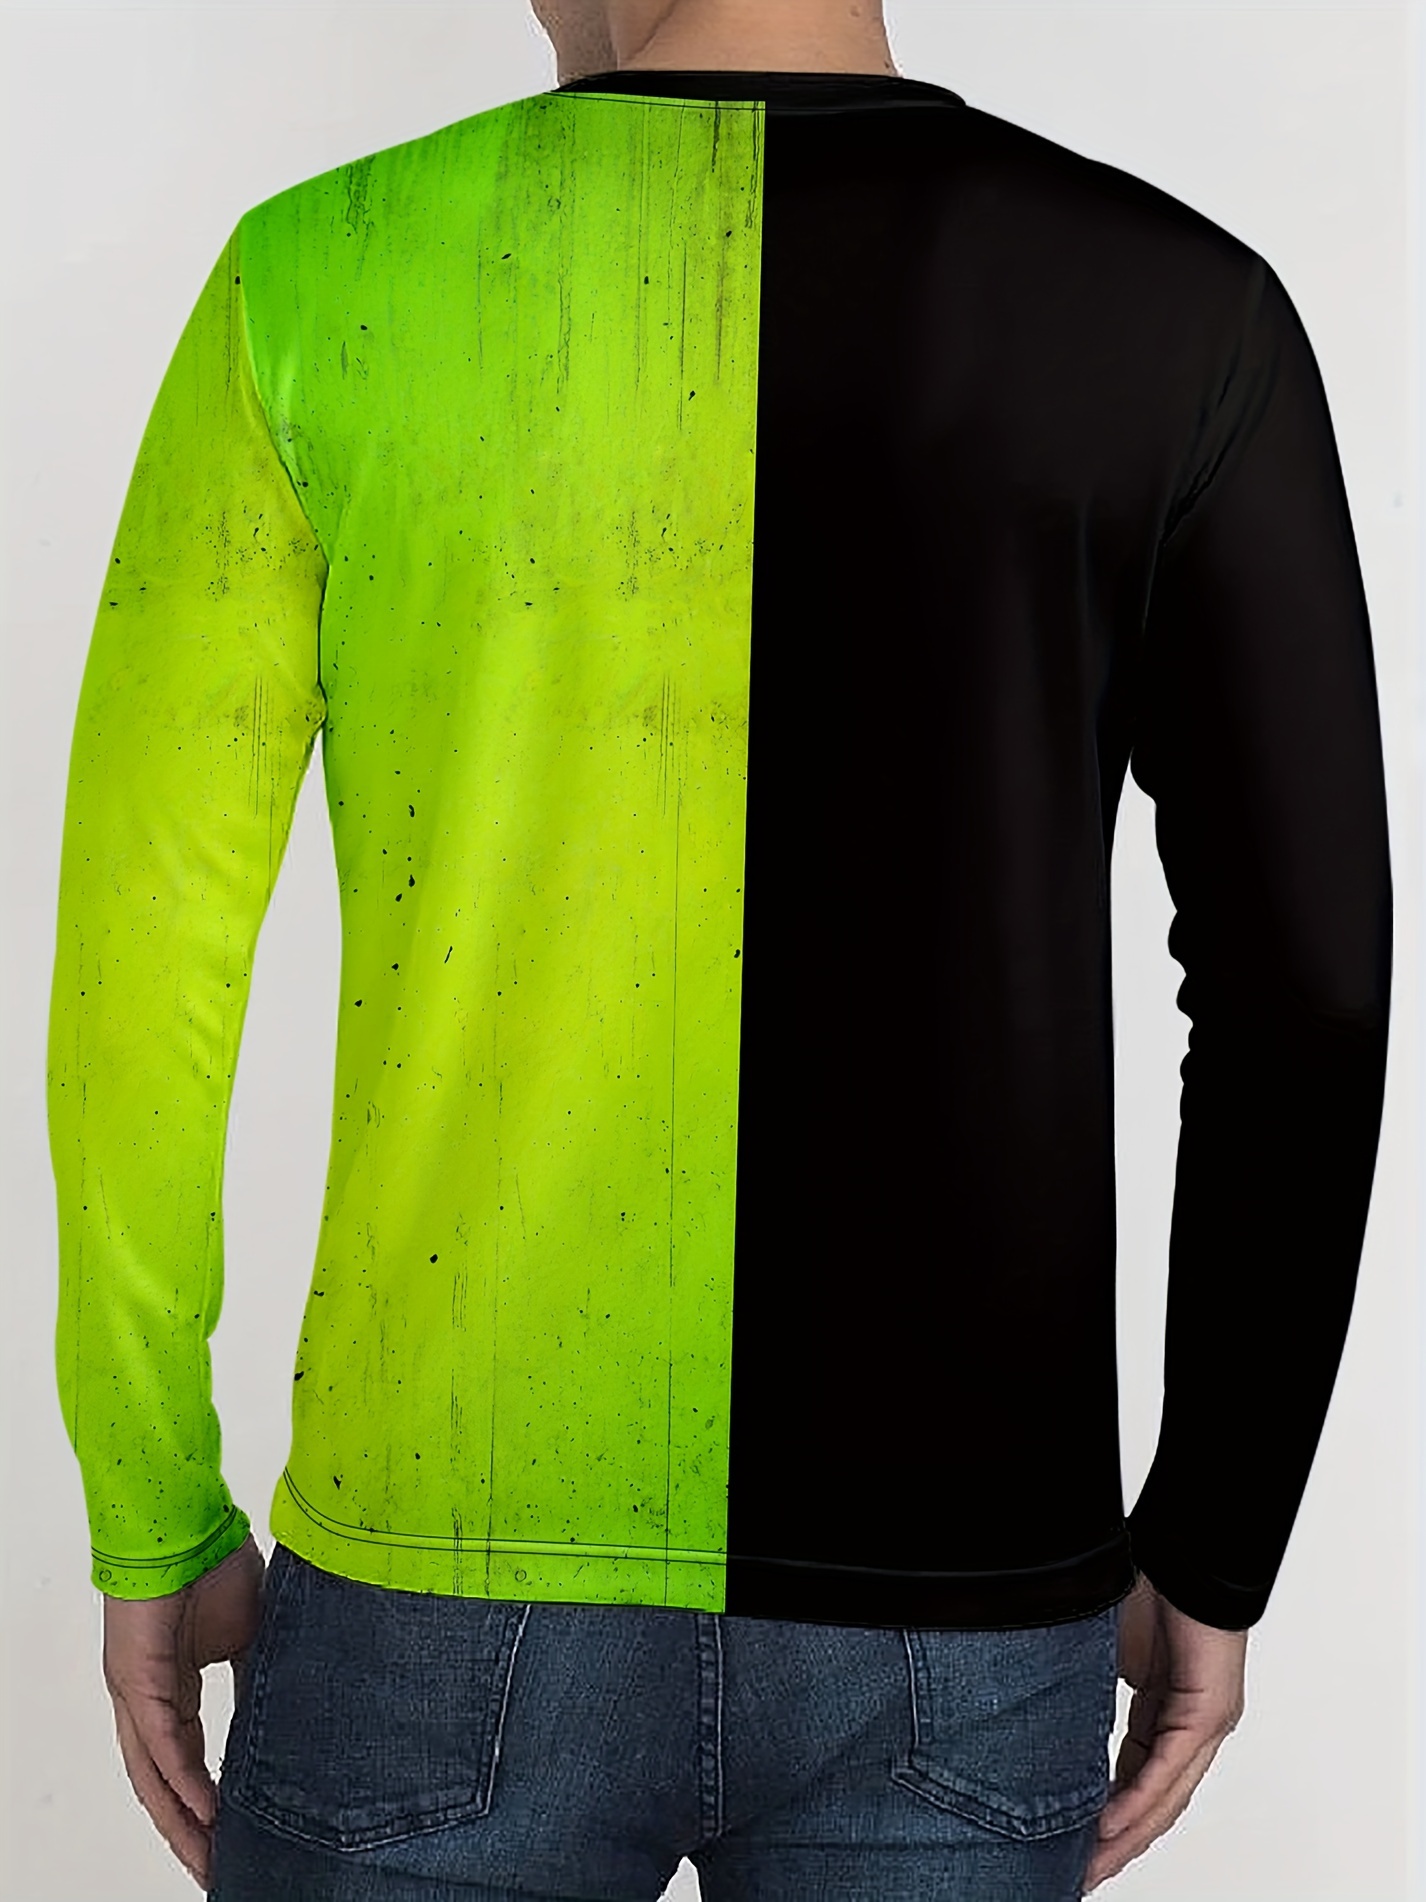 True Religion Full green set outfit Joggers + Tee shirt sweat sports Size  Medium